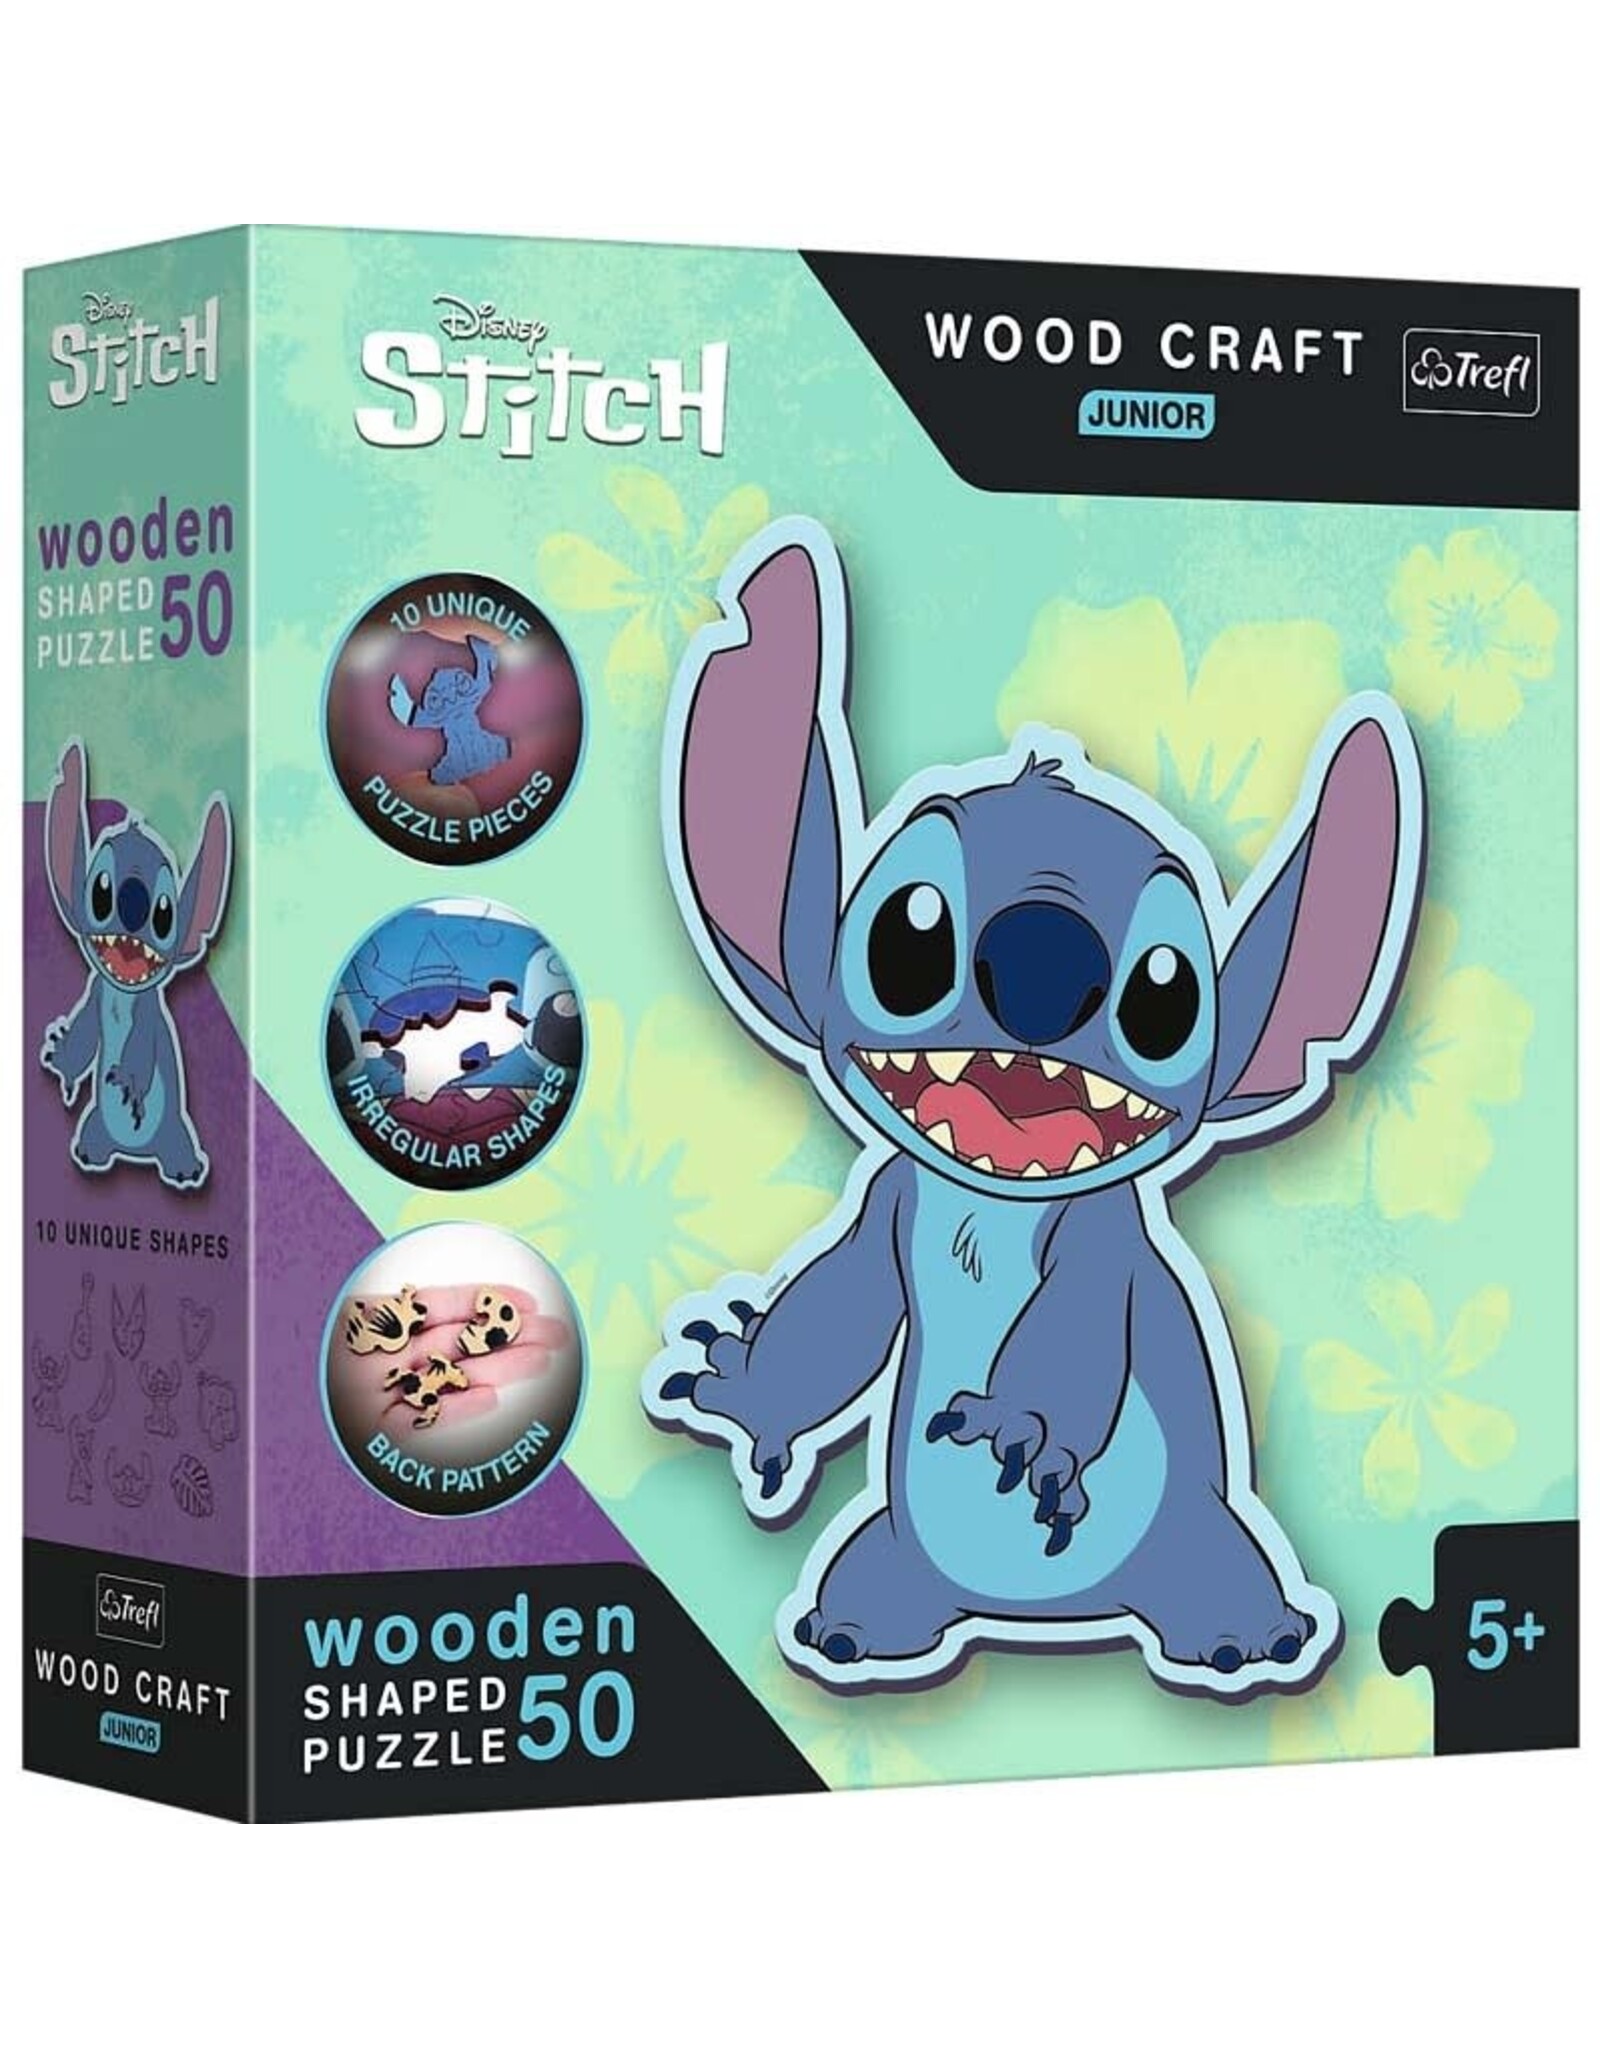 Trefl Wood Craft Junior "Stitch"